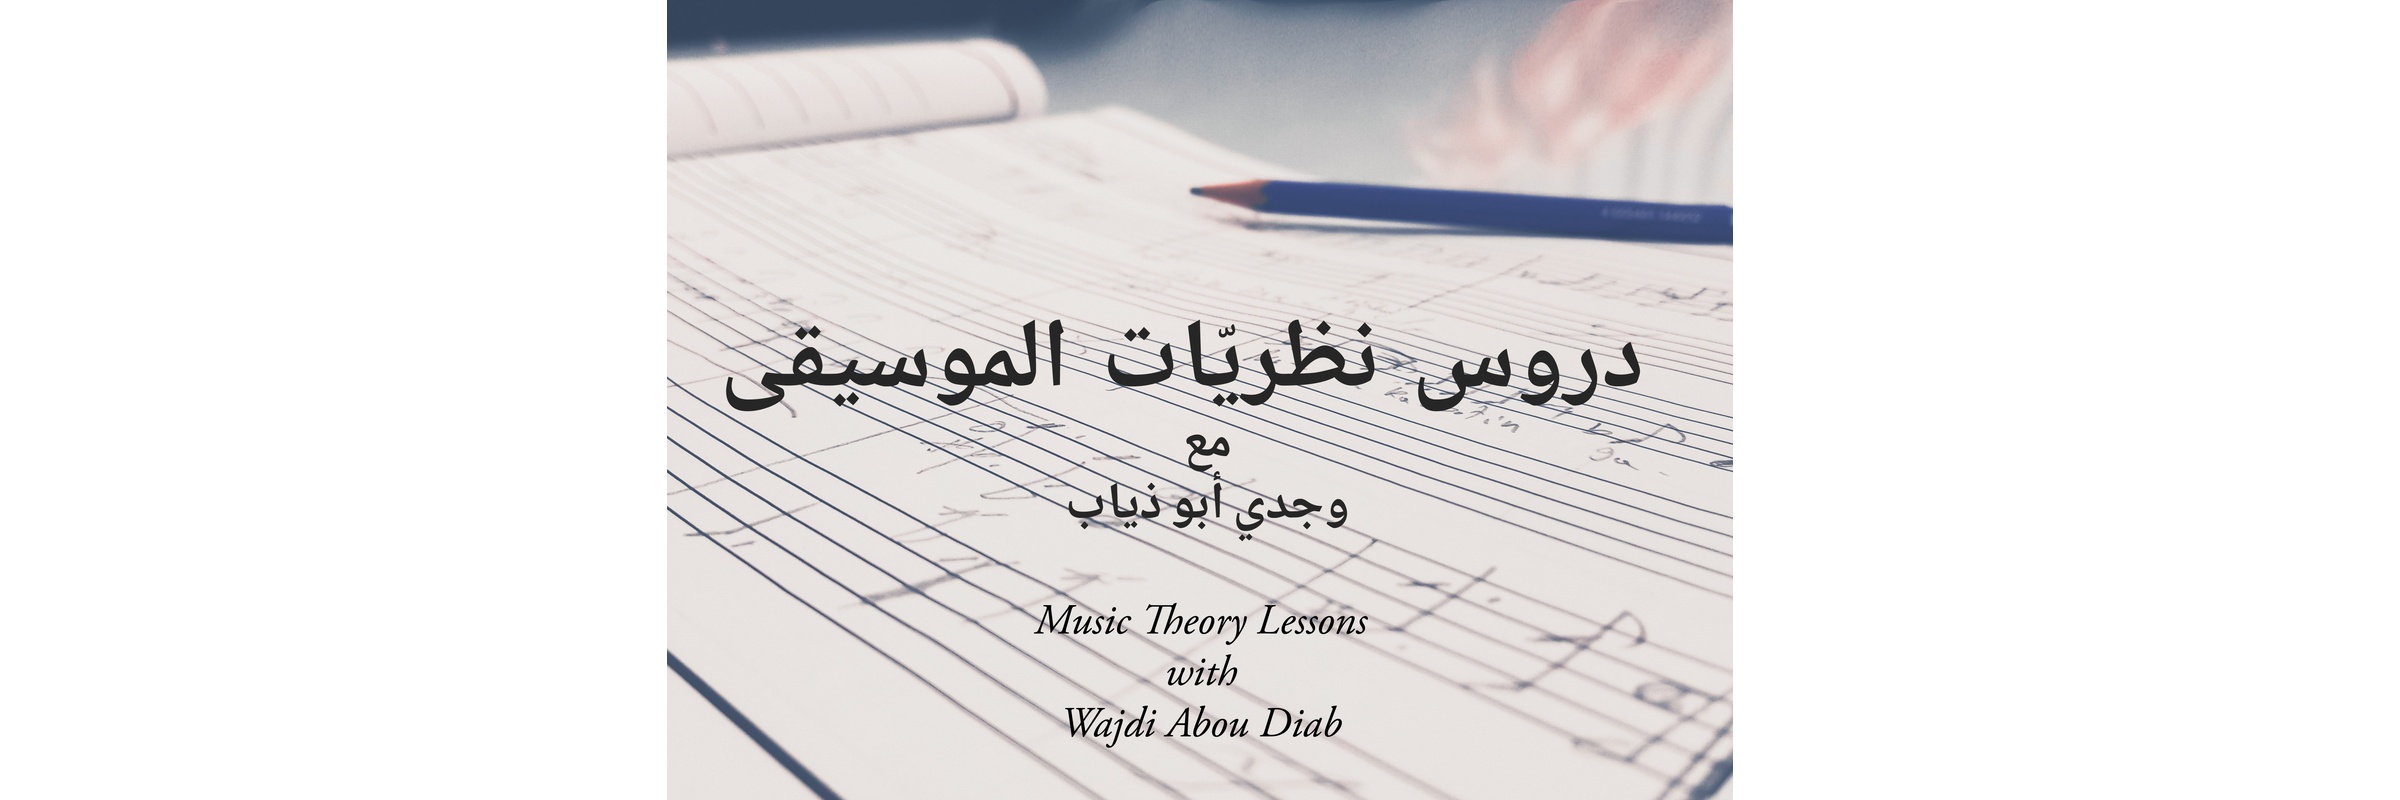 Wajdi AbouDiab - صفوف نظريات الموسيقى - Music theory lessons